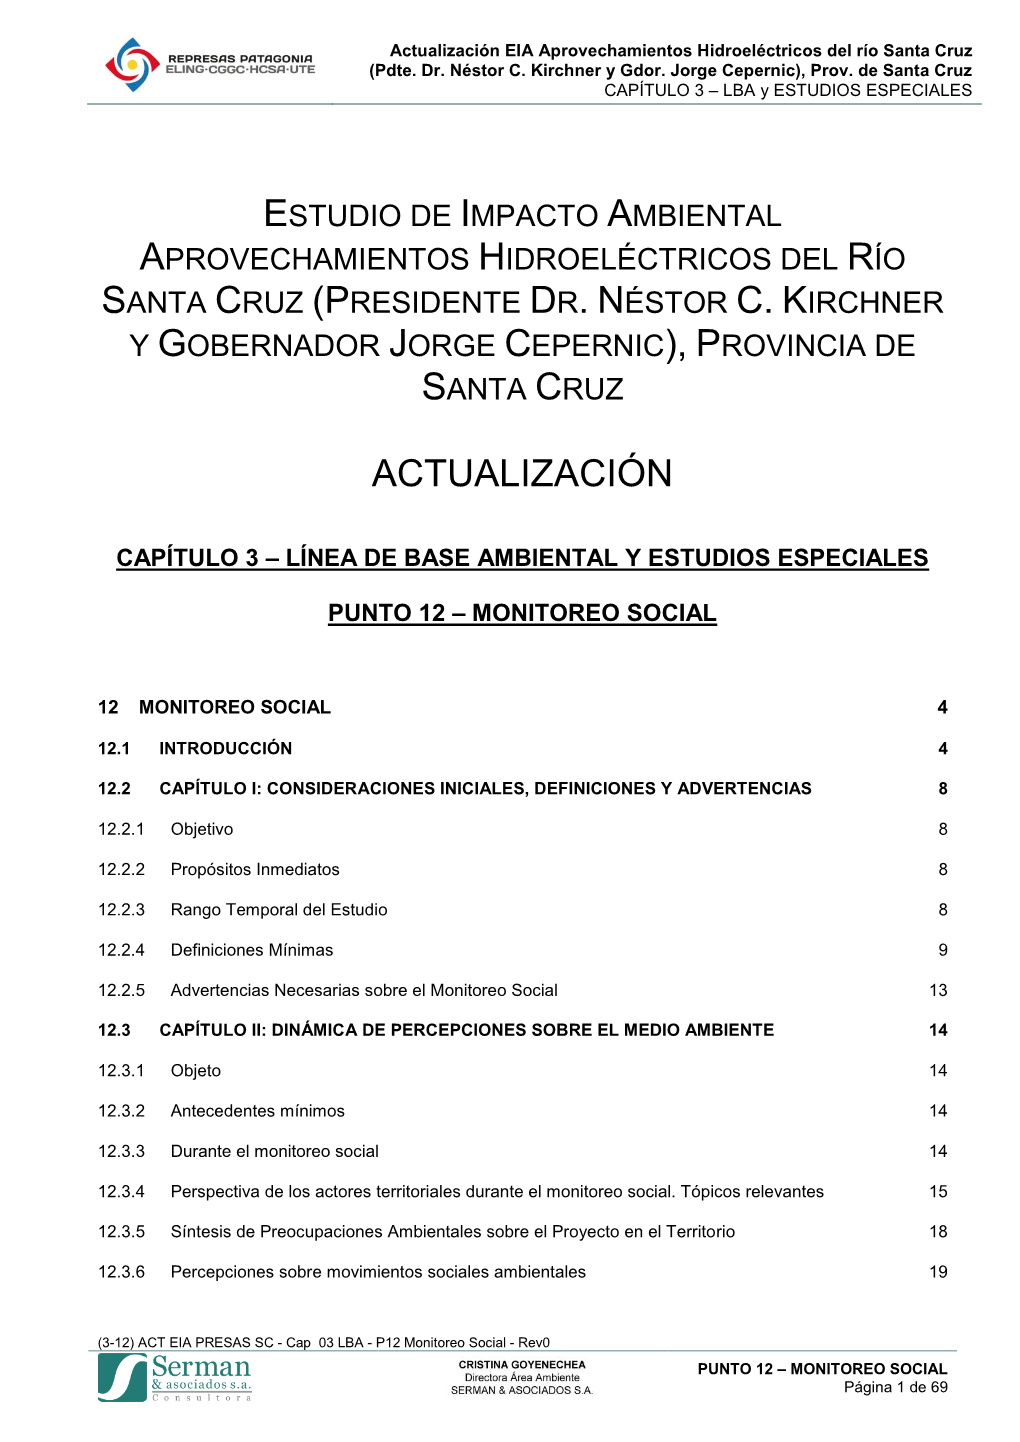 (3-12) ACT EIA PRESAS SC – Cap 03 LBA – P12 Monitoreo Social